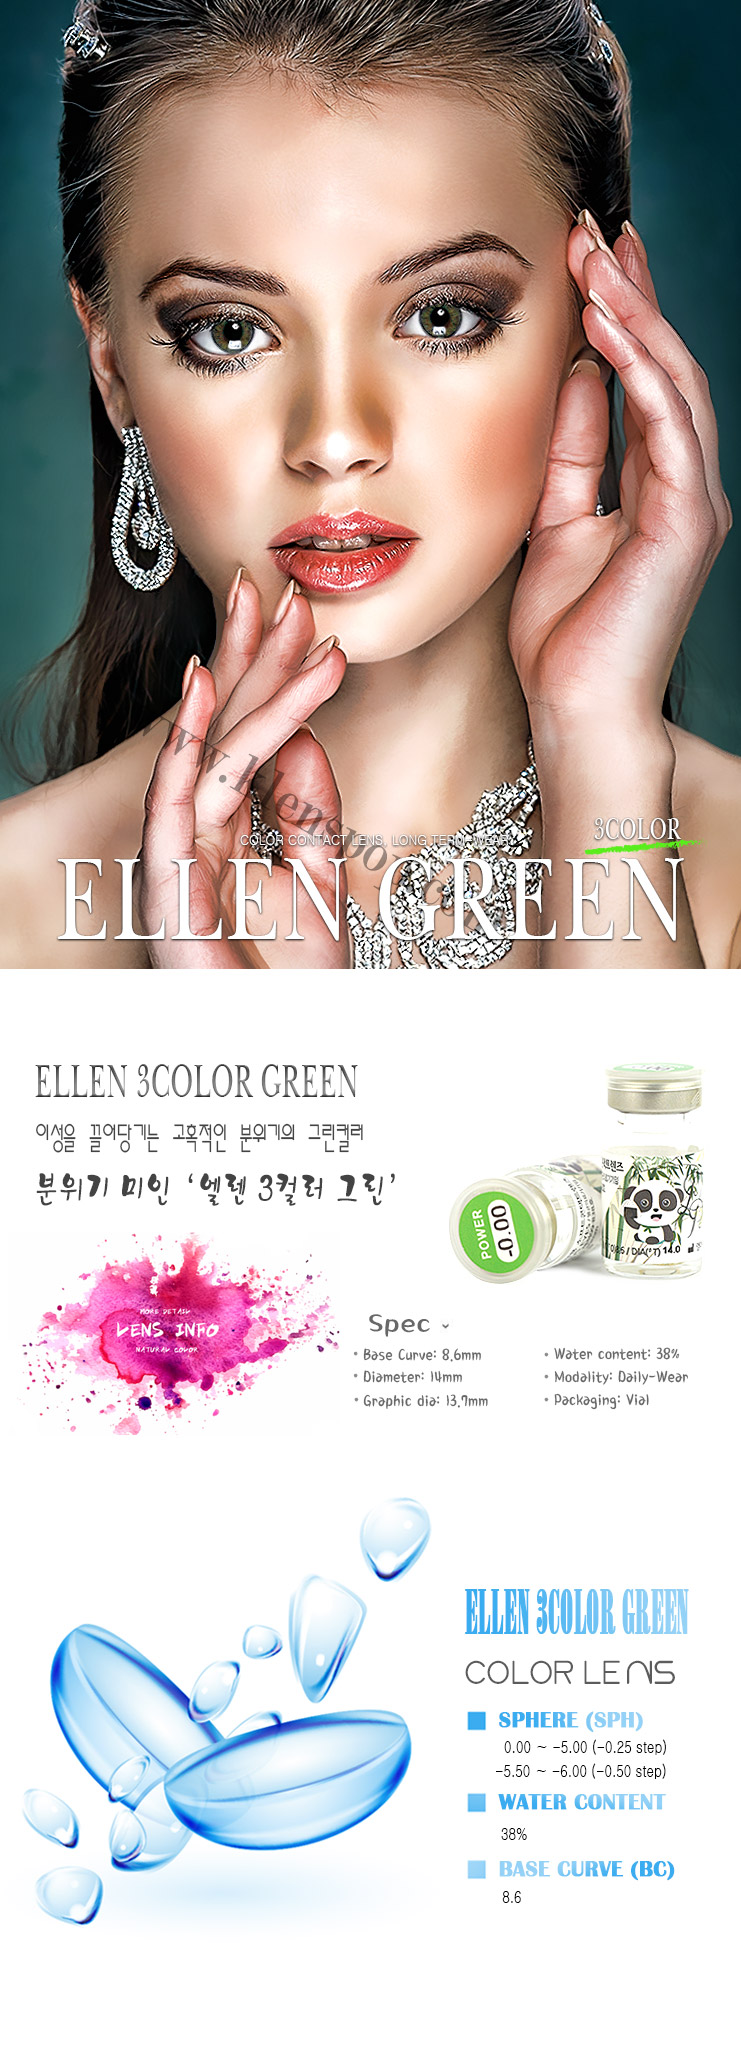 KLENSPOP Hello Lenspop Ellen 3color Green Color Contact Lenses